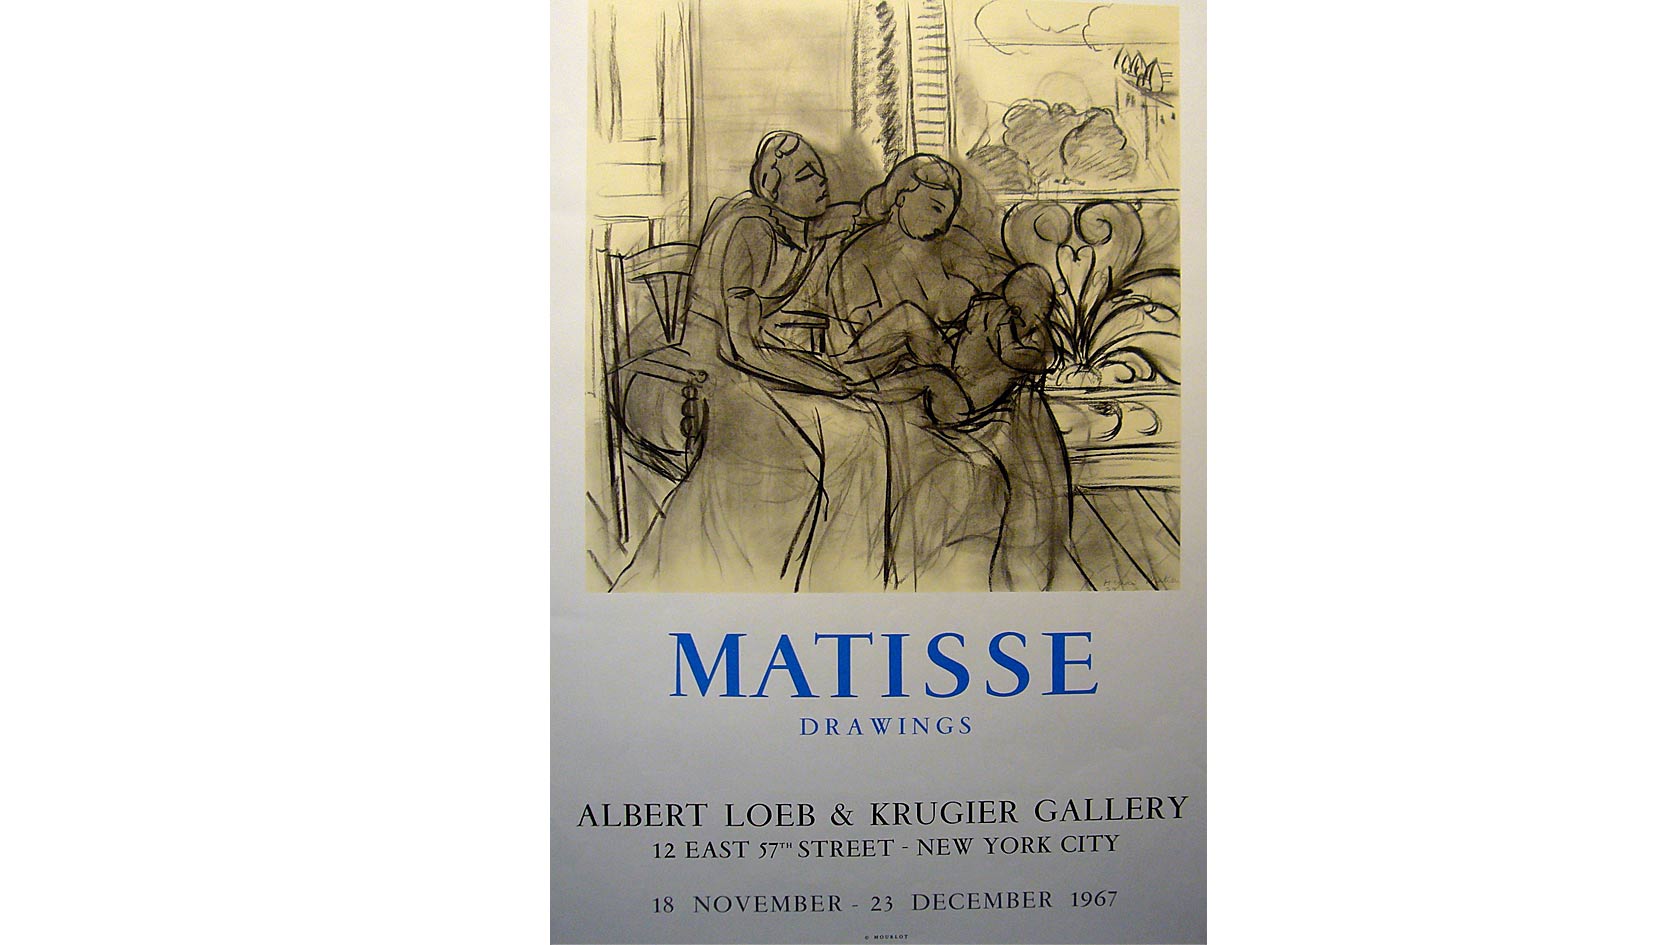 Original French Matisse Exhibition Poster, Drawings Loeb + Krugier Gallery,1967 